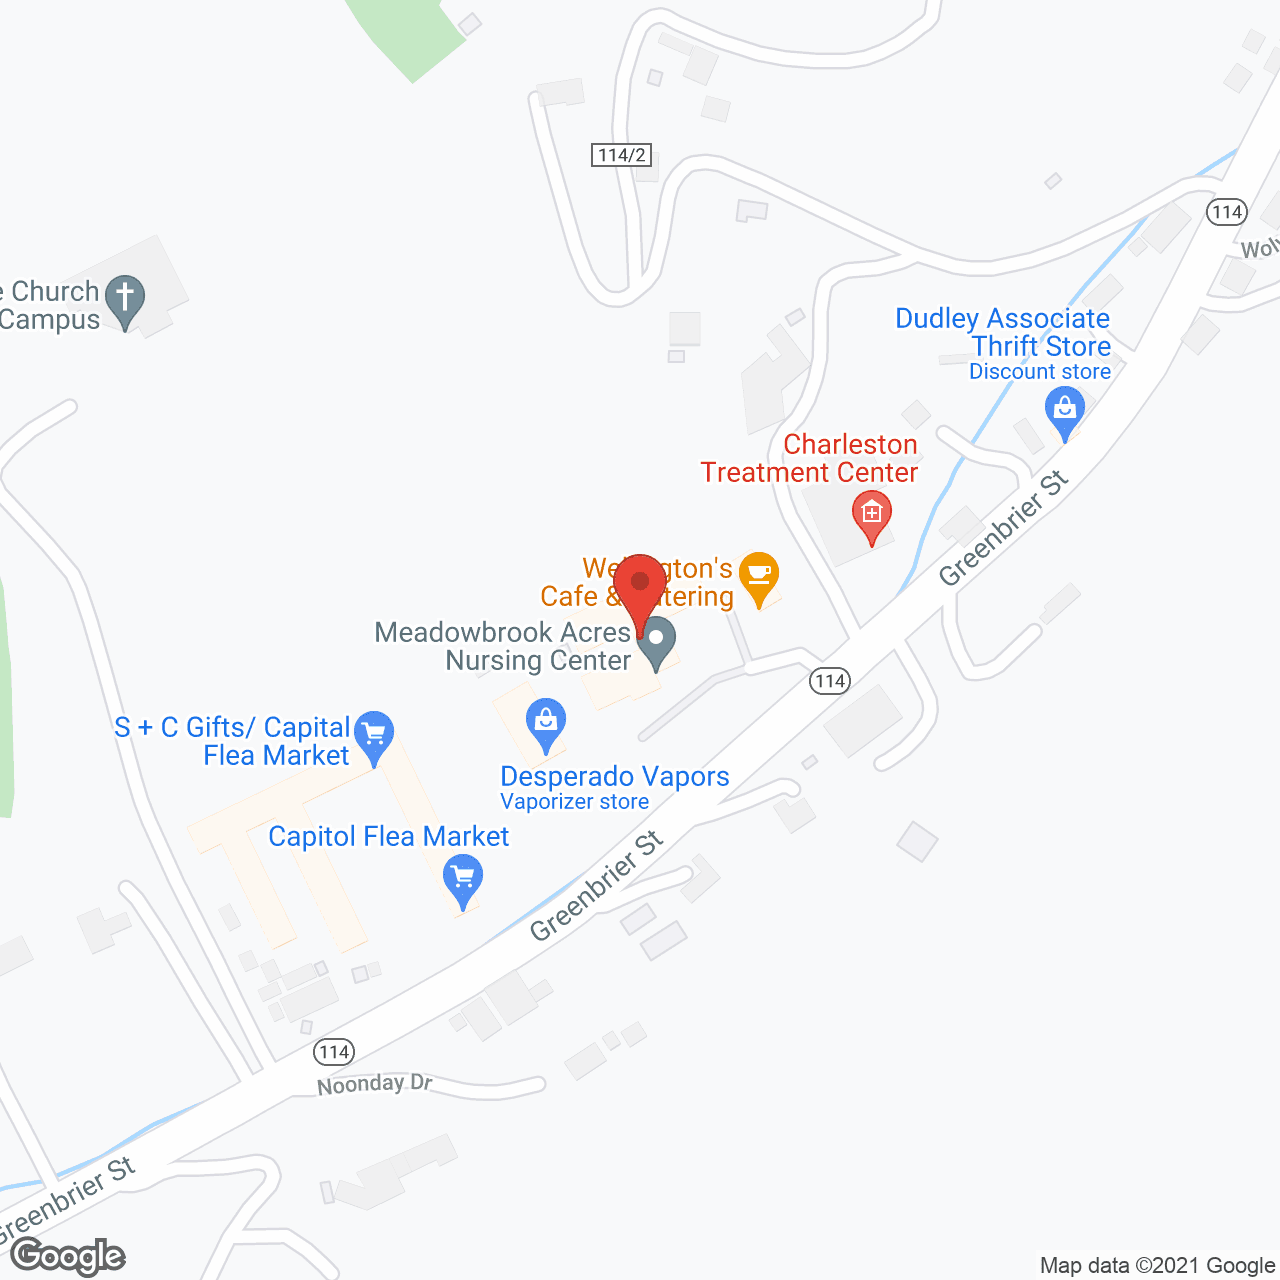 Meadowbrook Acres Ctr in google map